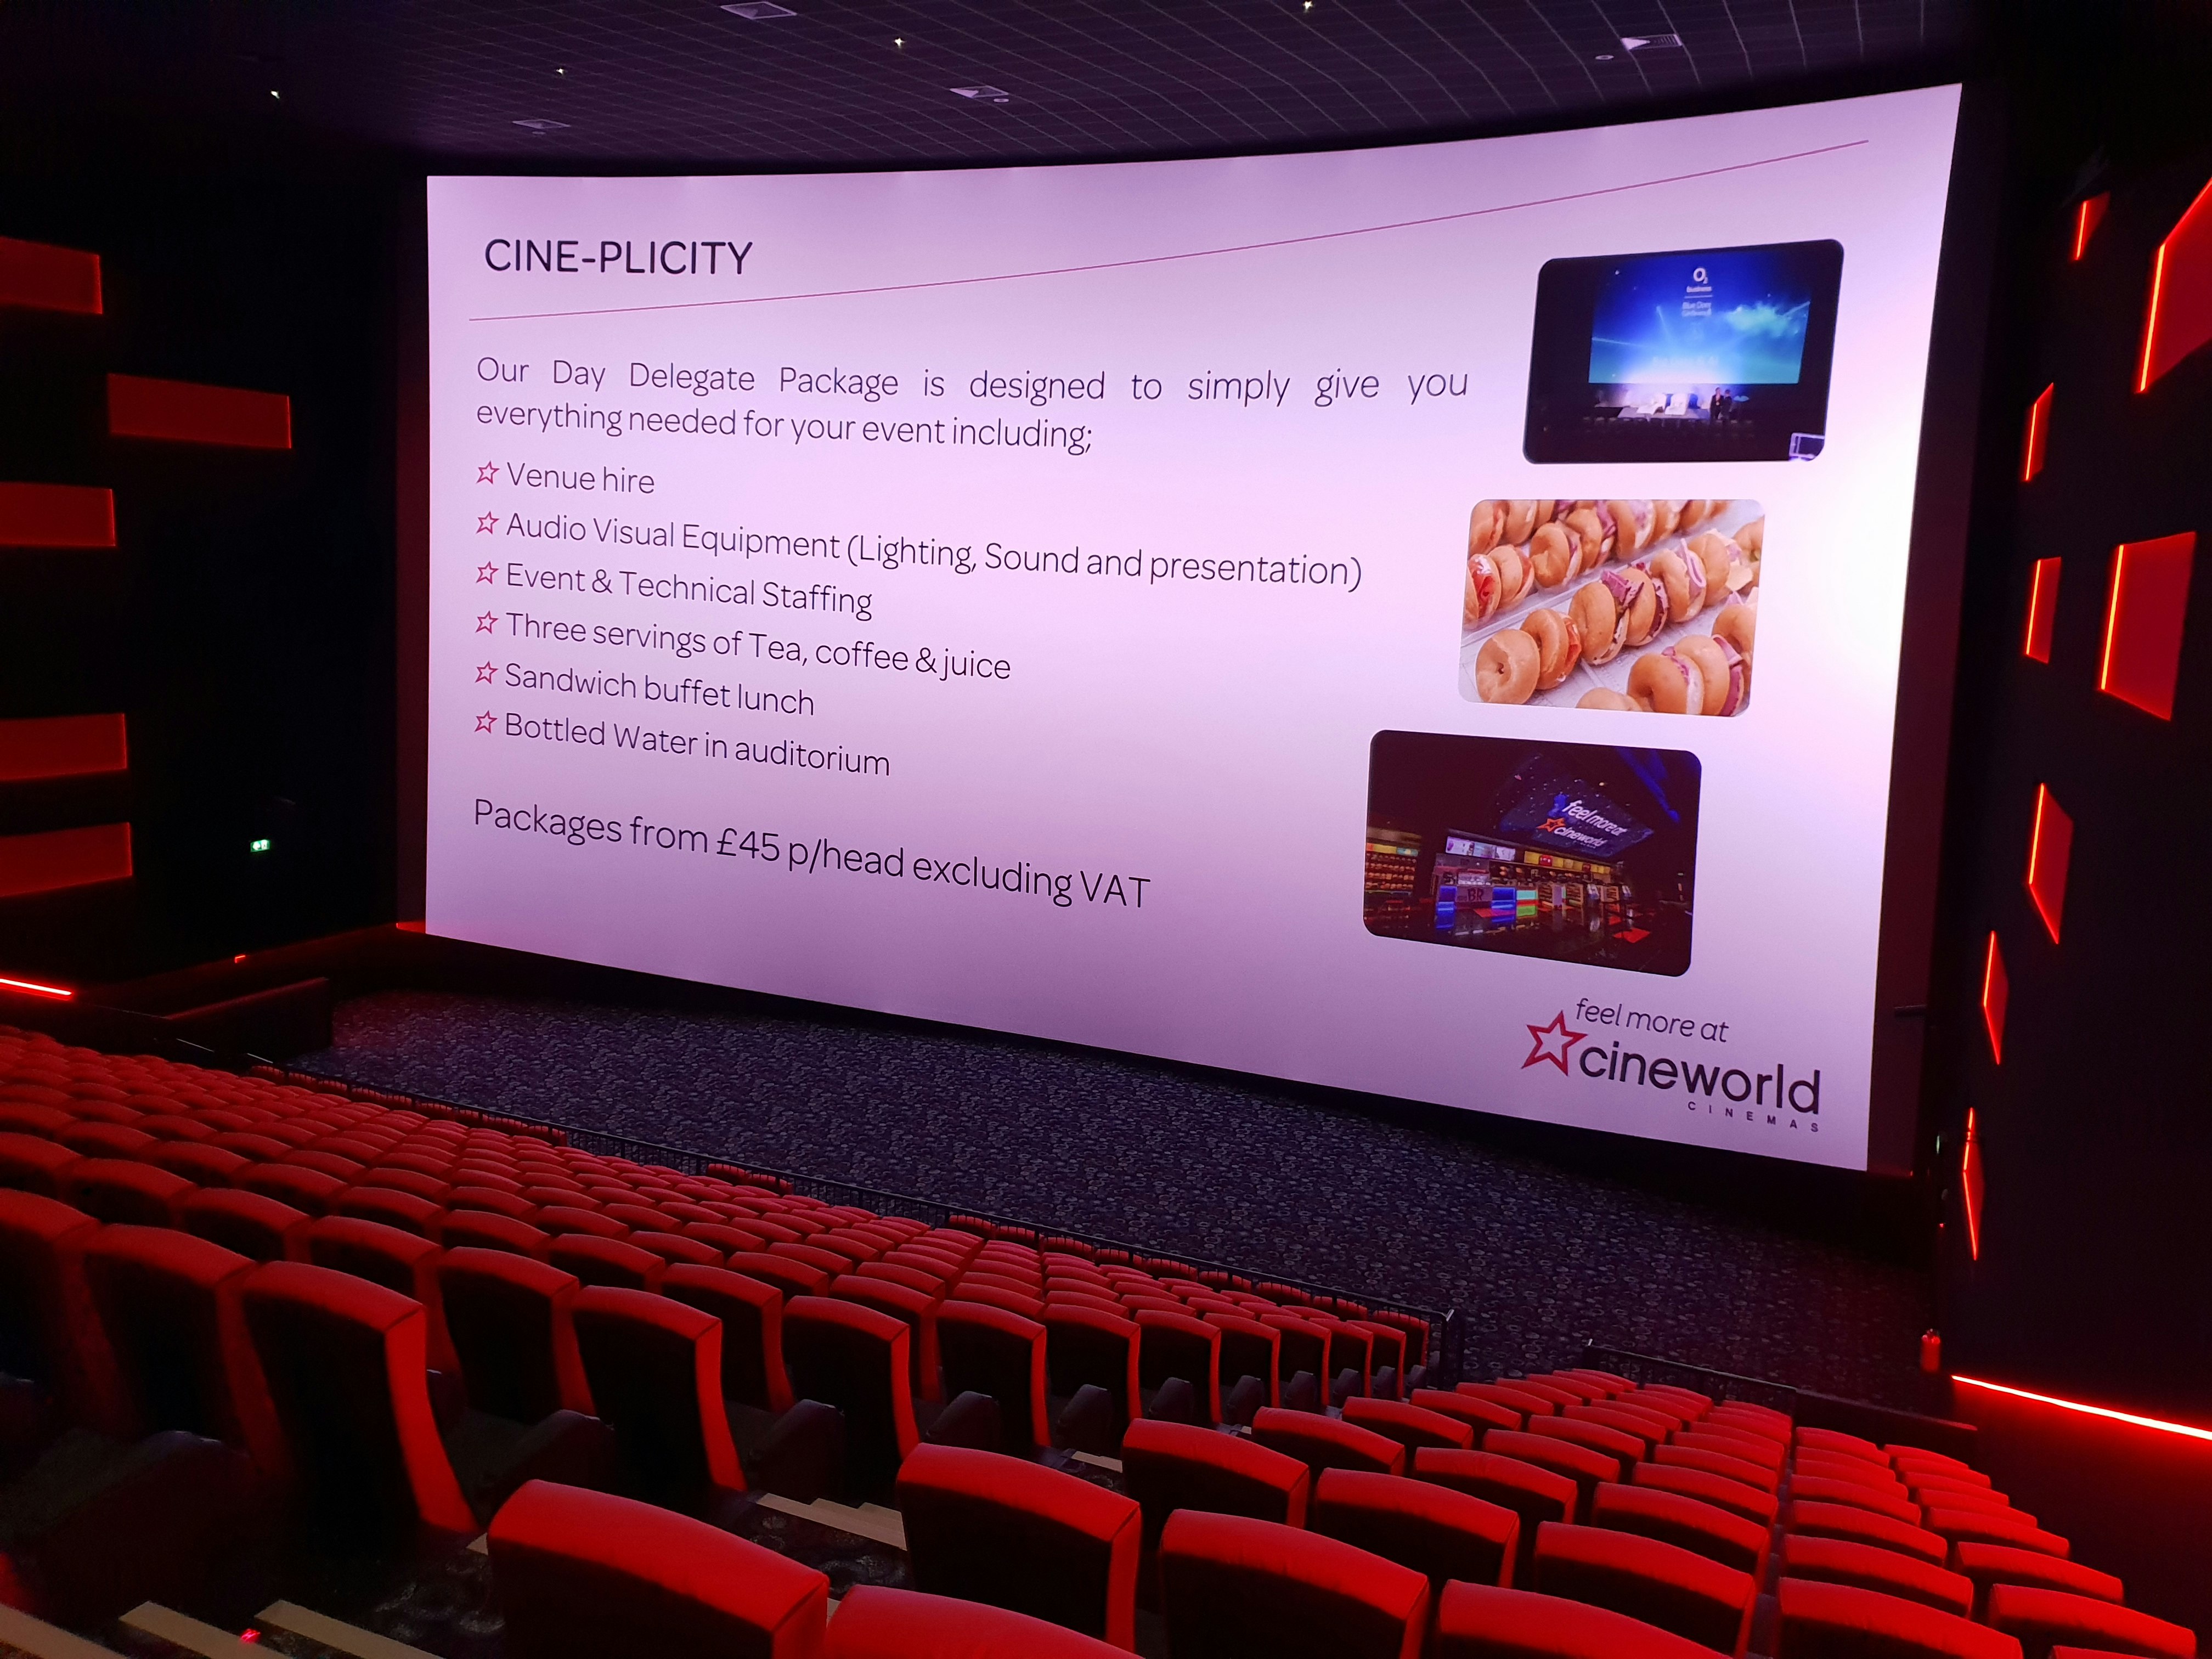 Cineworld Watford - IMAX screen 1 image 7